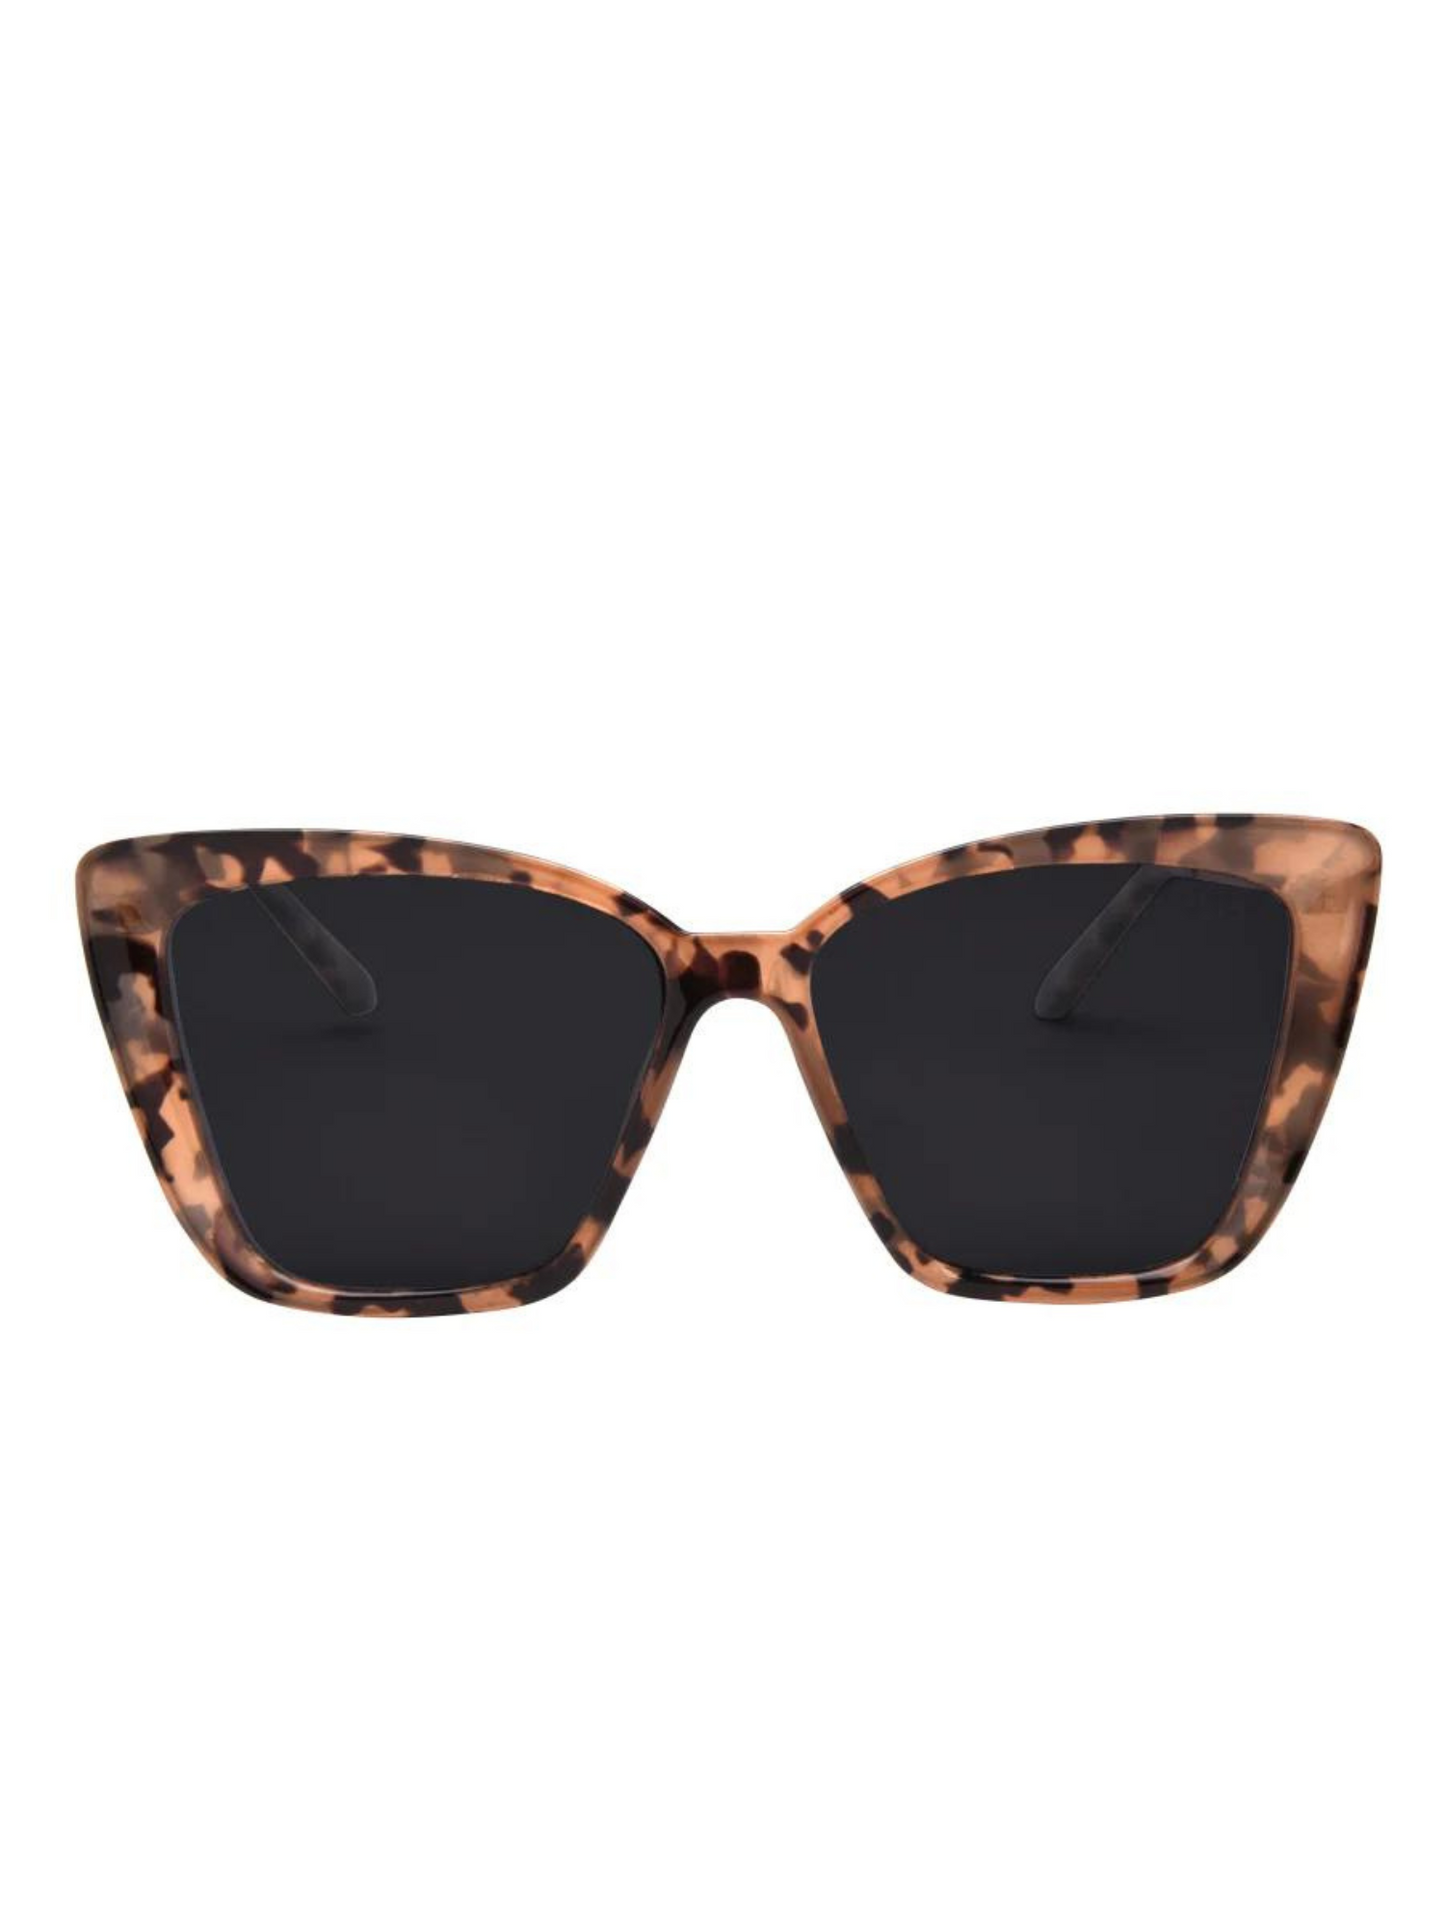 Aloha Fox Sunglasses - Blonde Tort/Smoke